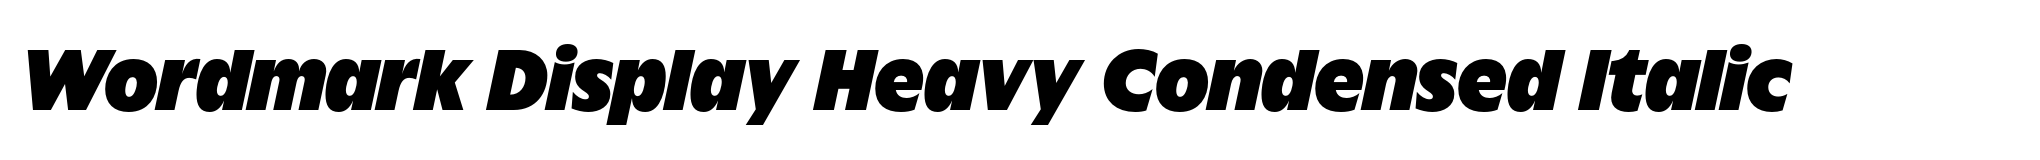 Wordmark Display Heavy Condensed Italic image